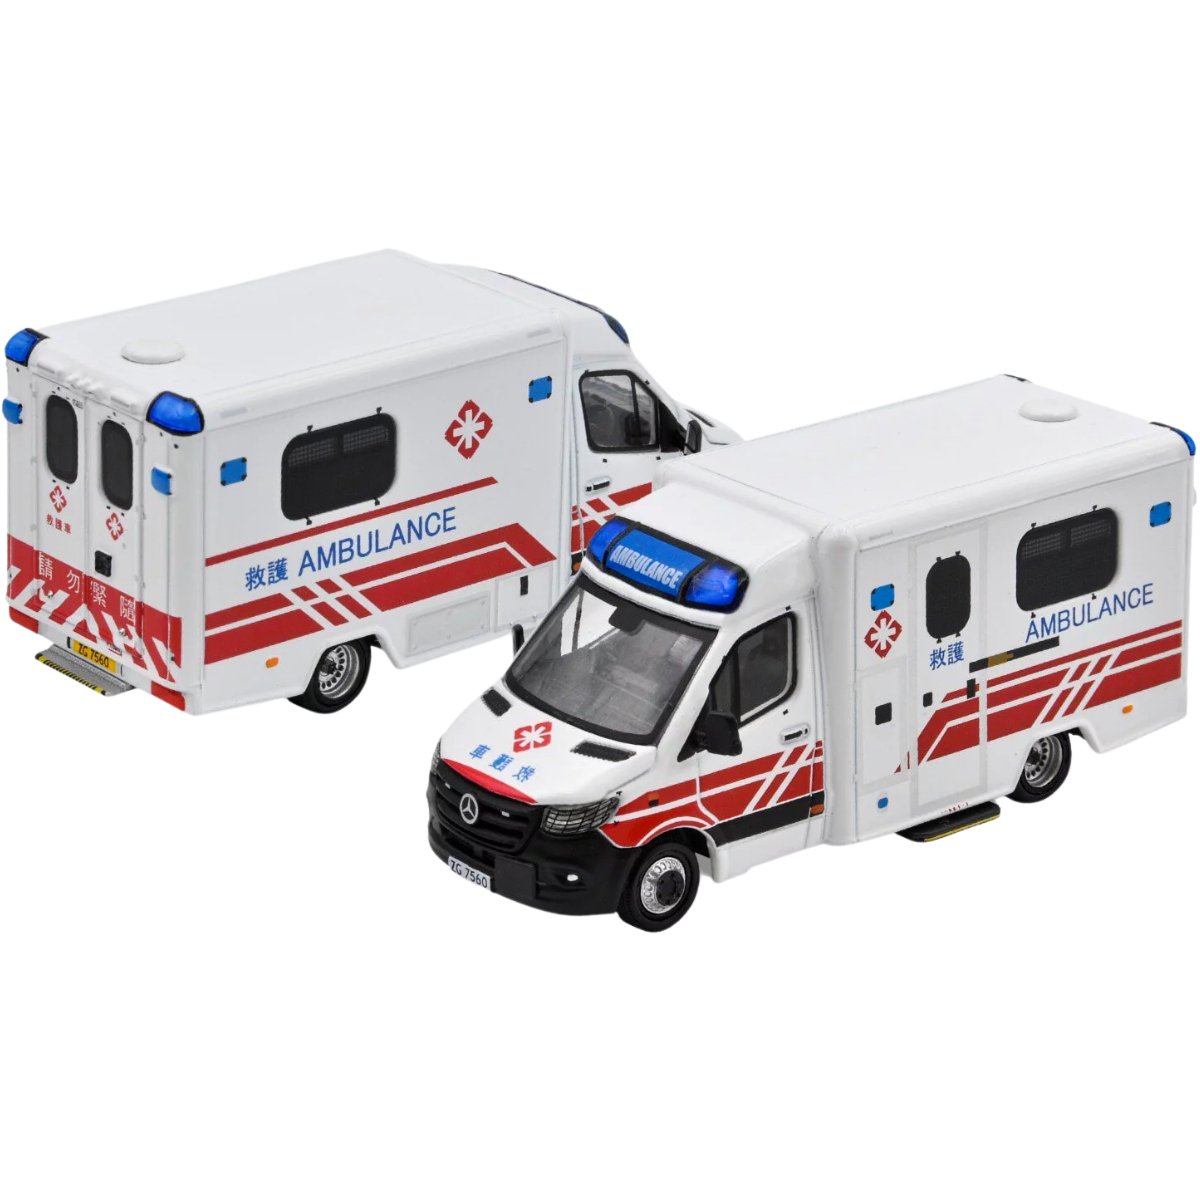 Era Car Mercedes-Benz Sprinter HK Ambulance (1:64 Scale)